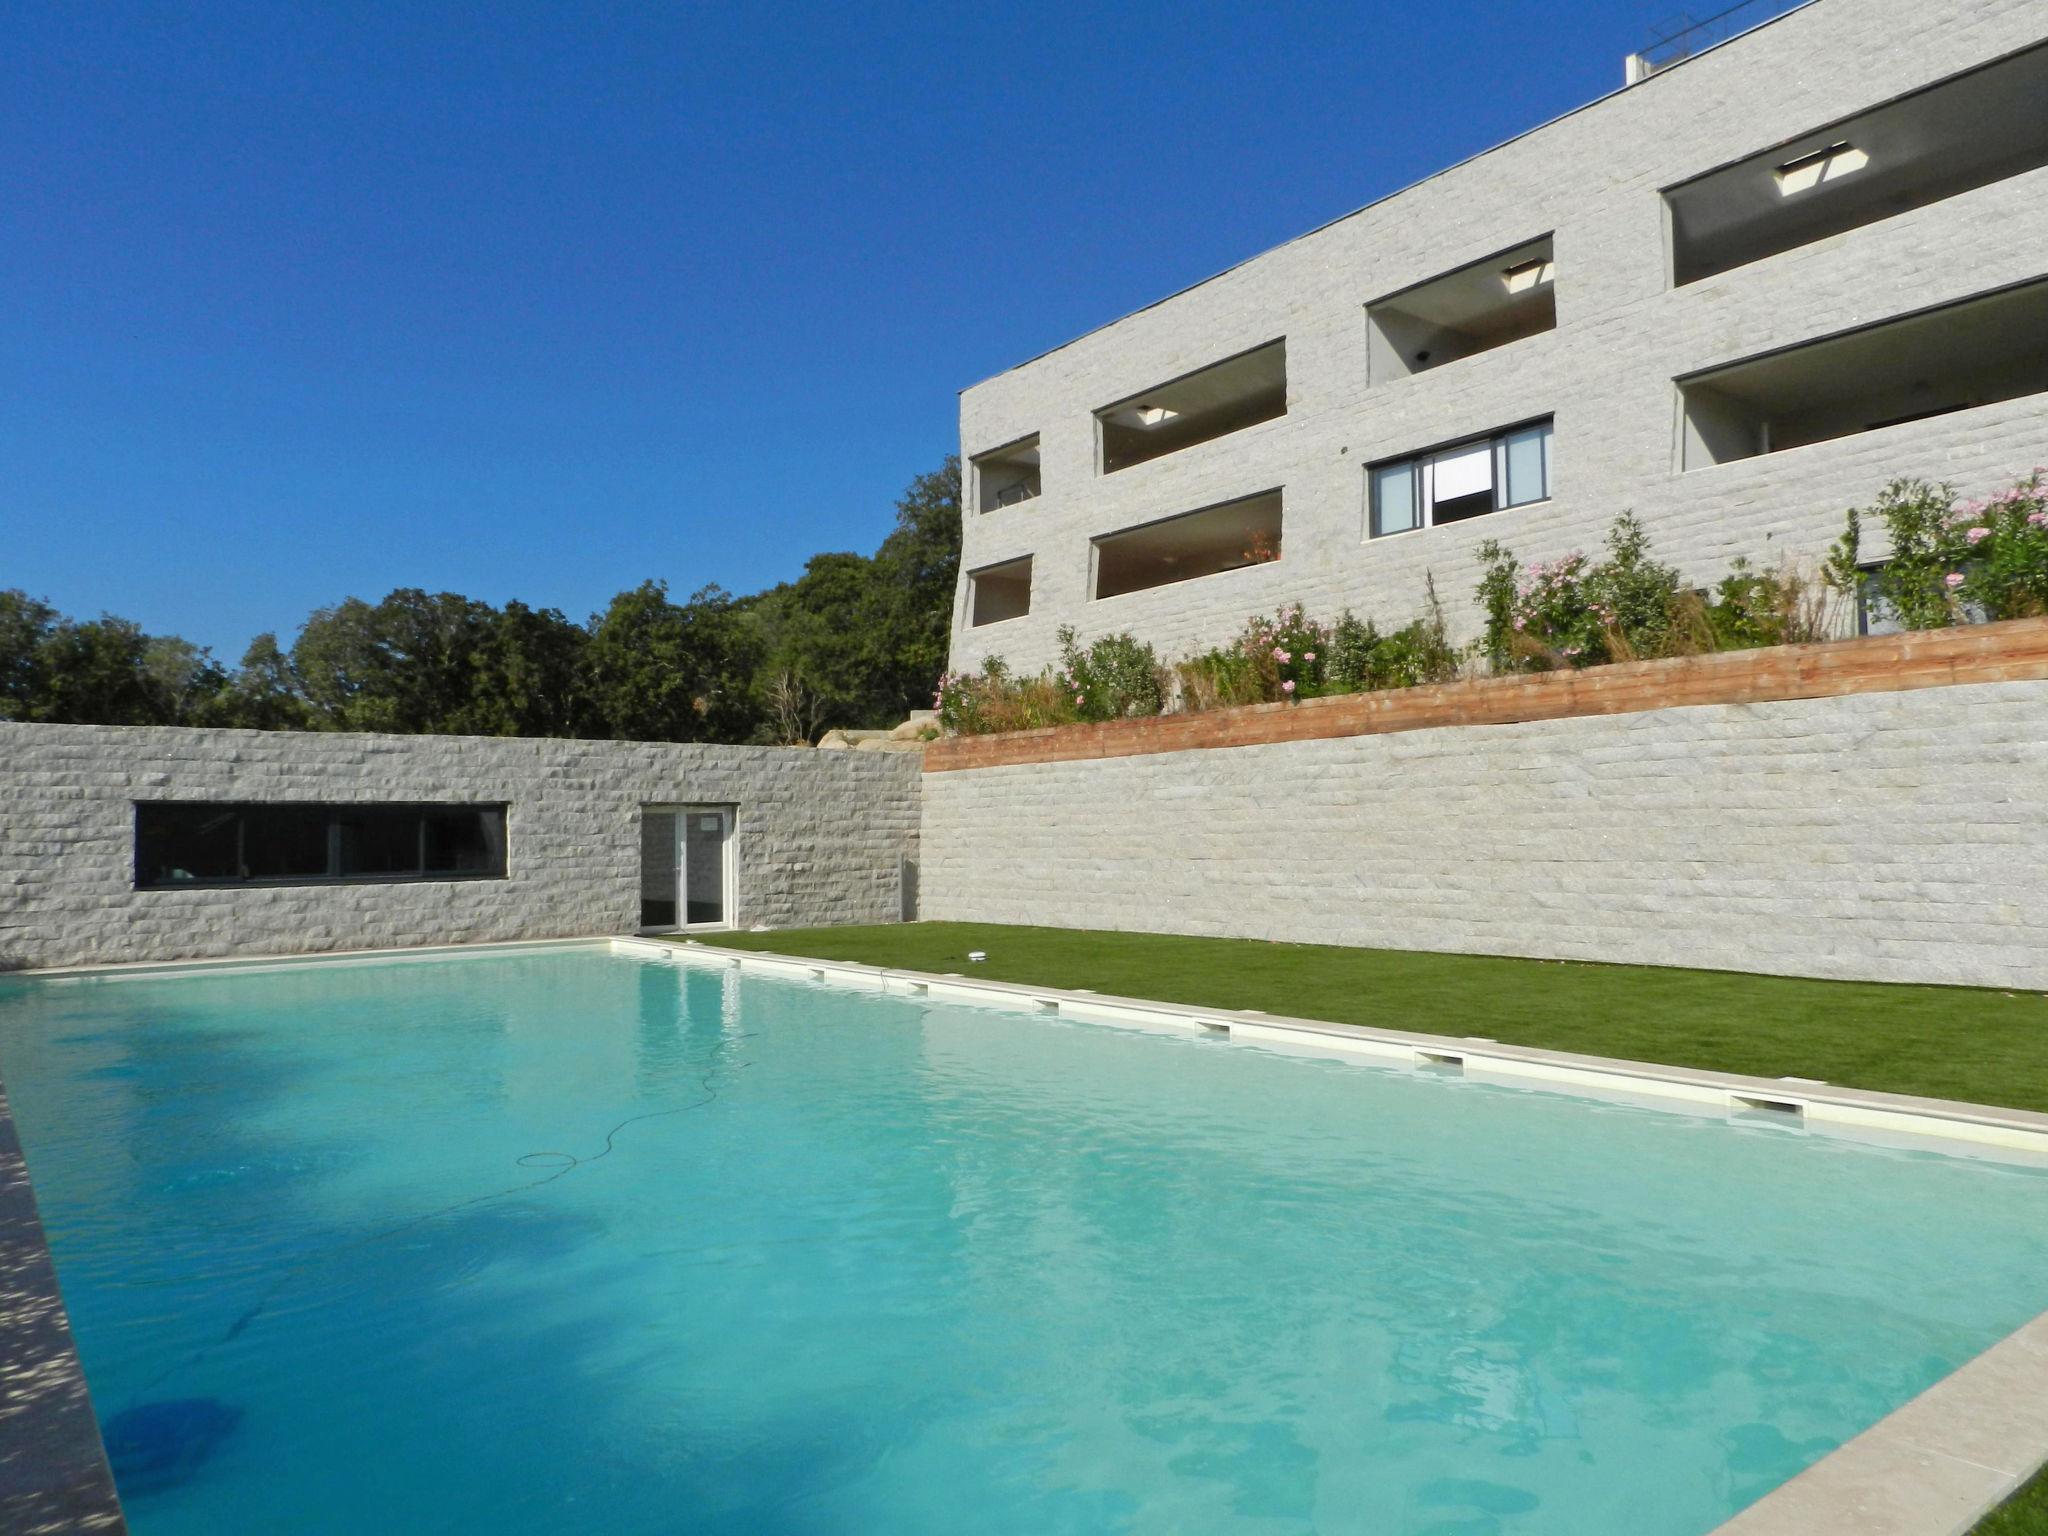 Photo 1 - 1 bedroom Apartment in Porto-Vecchio with swimming pool and sea view